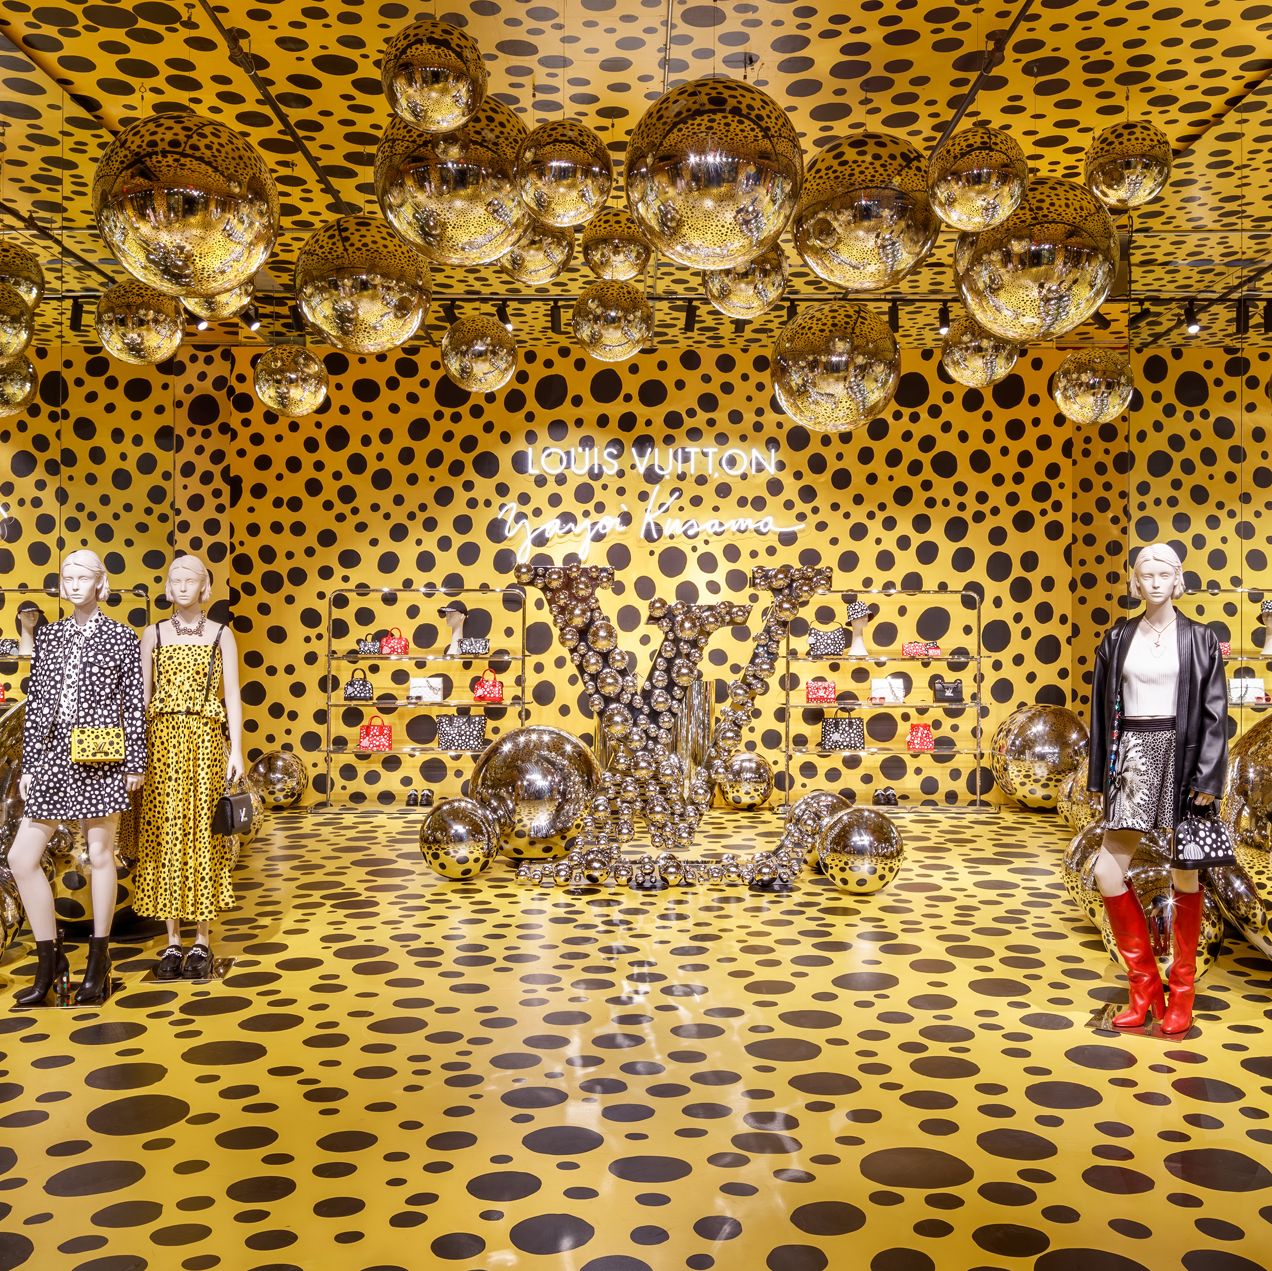 Louis Vuitton's New York Store Has Been Overtaken by Yayoi Kusama-Inspired Polka Dots